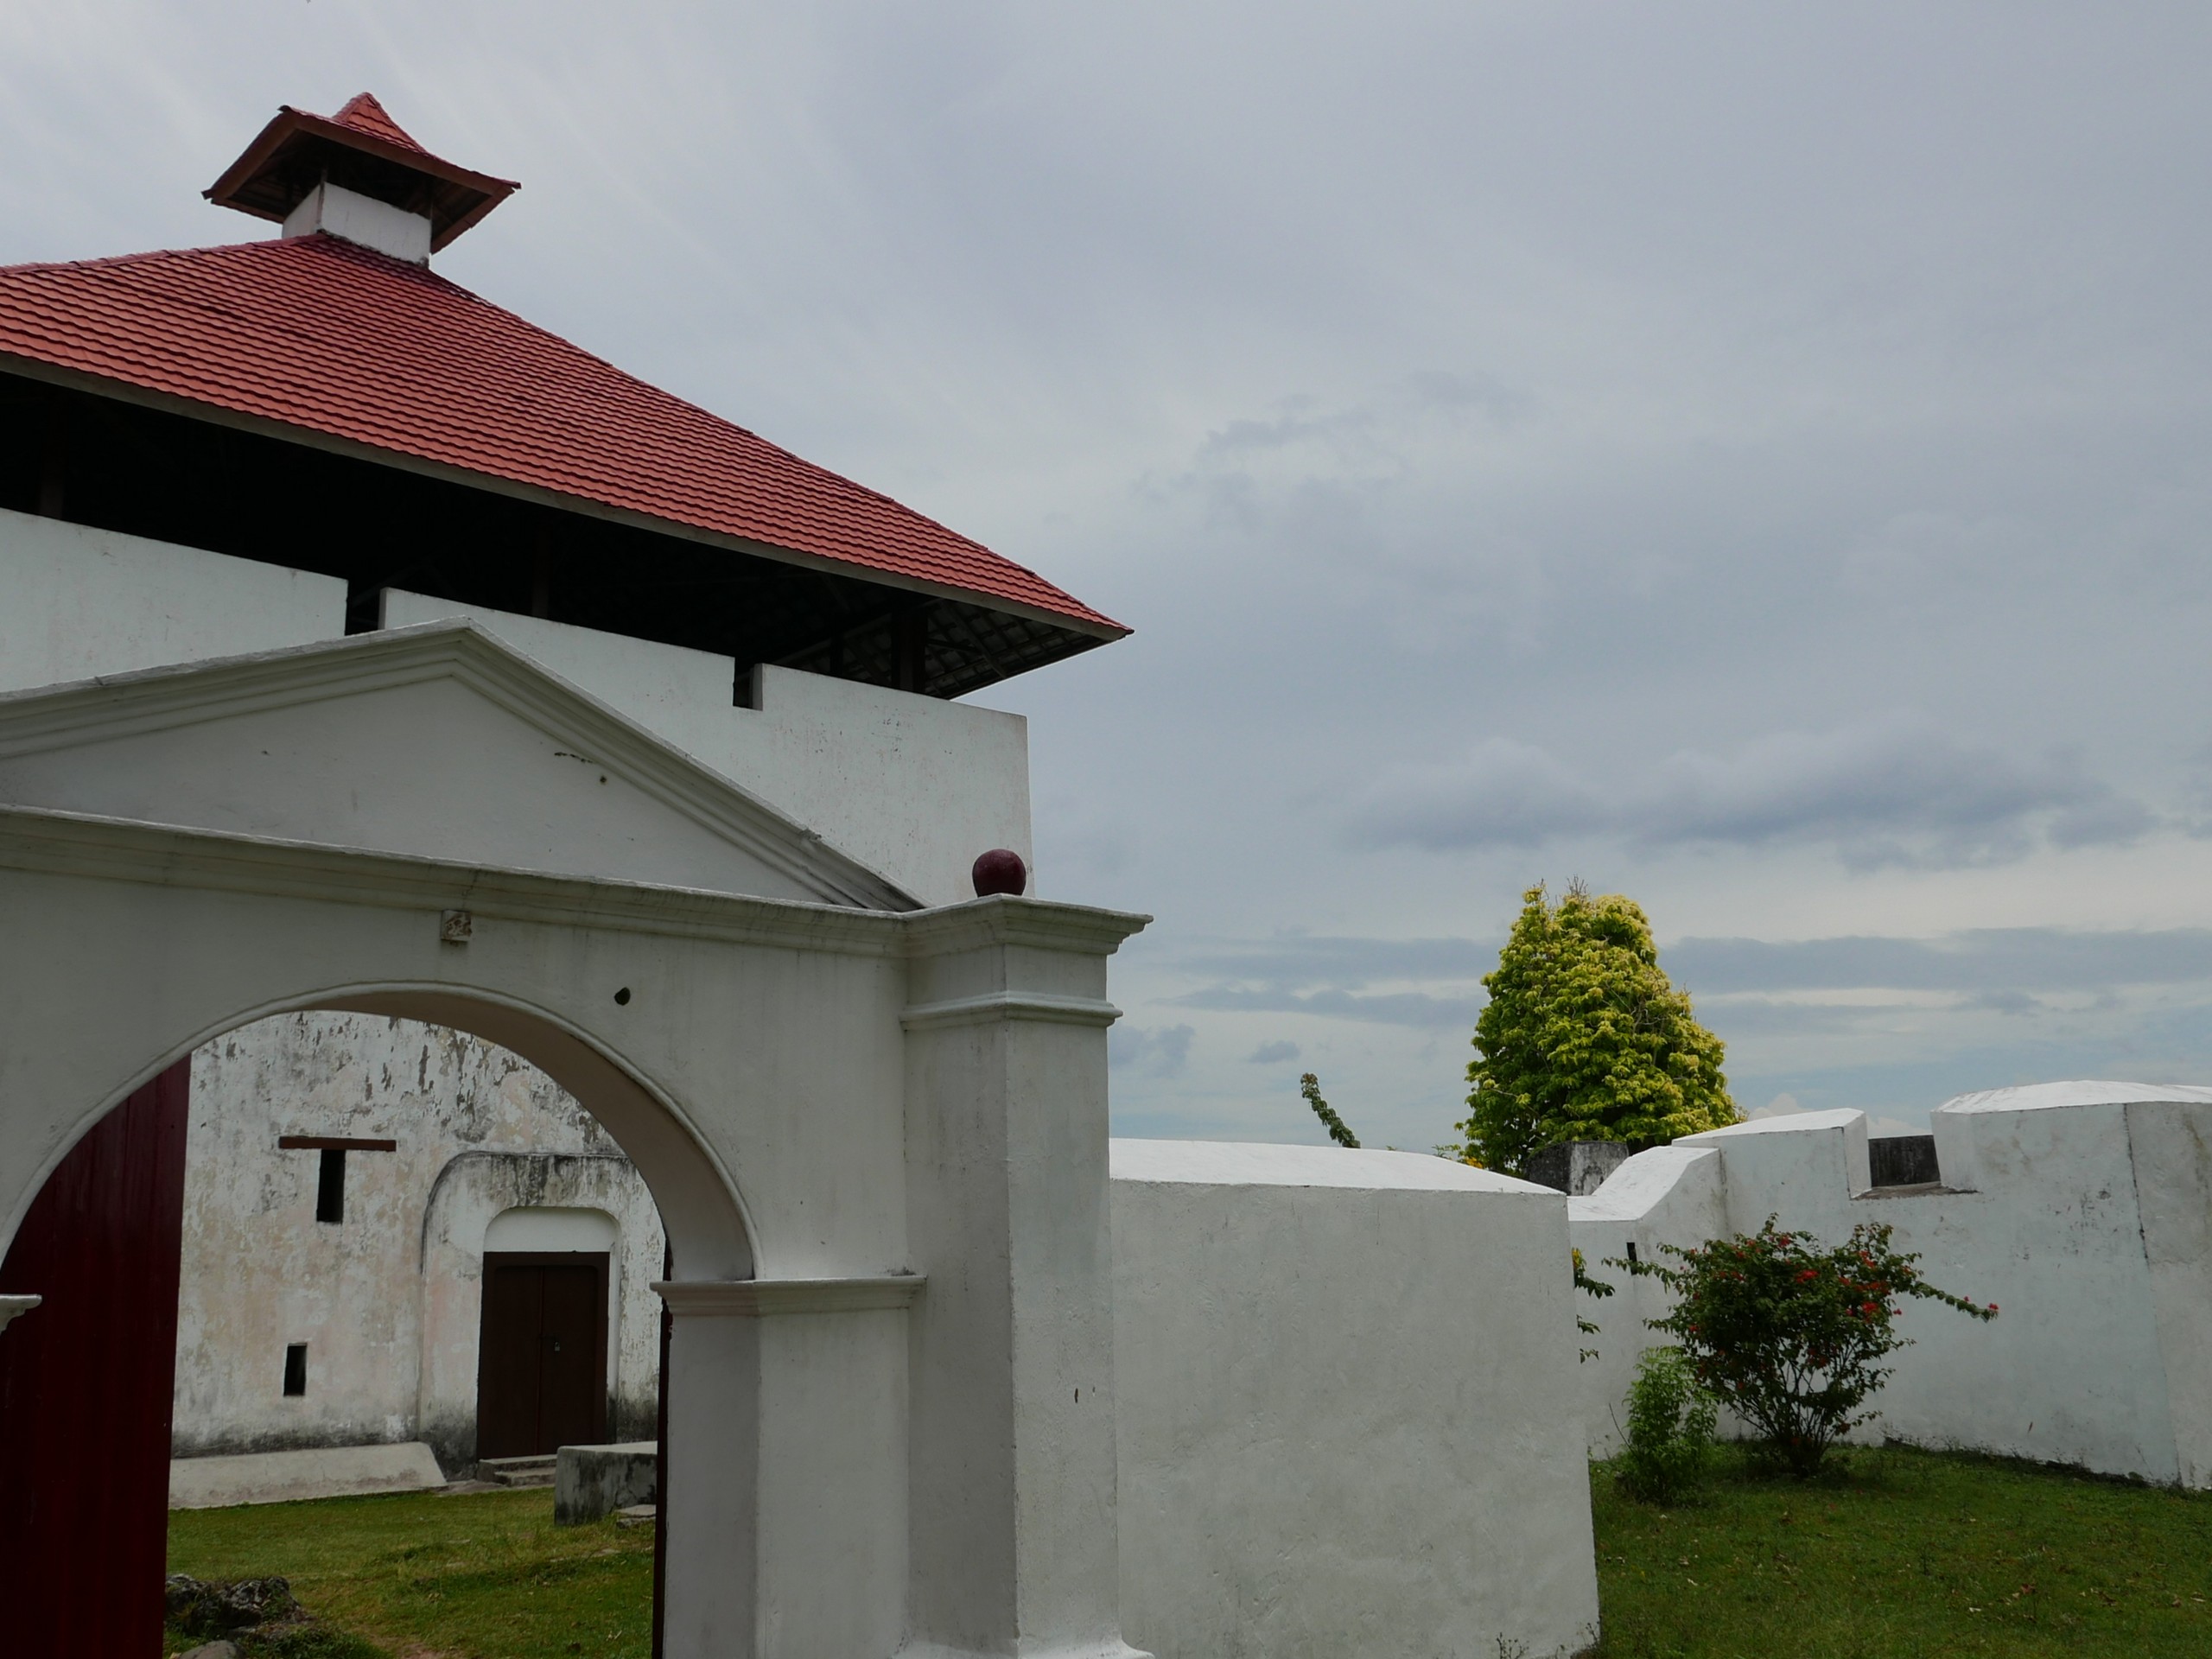 Visit to Fort Amsterdam, Maluku, Indonesia